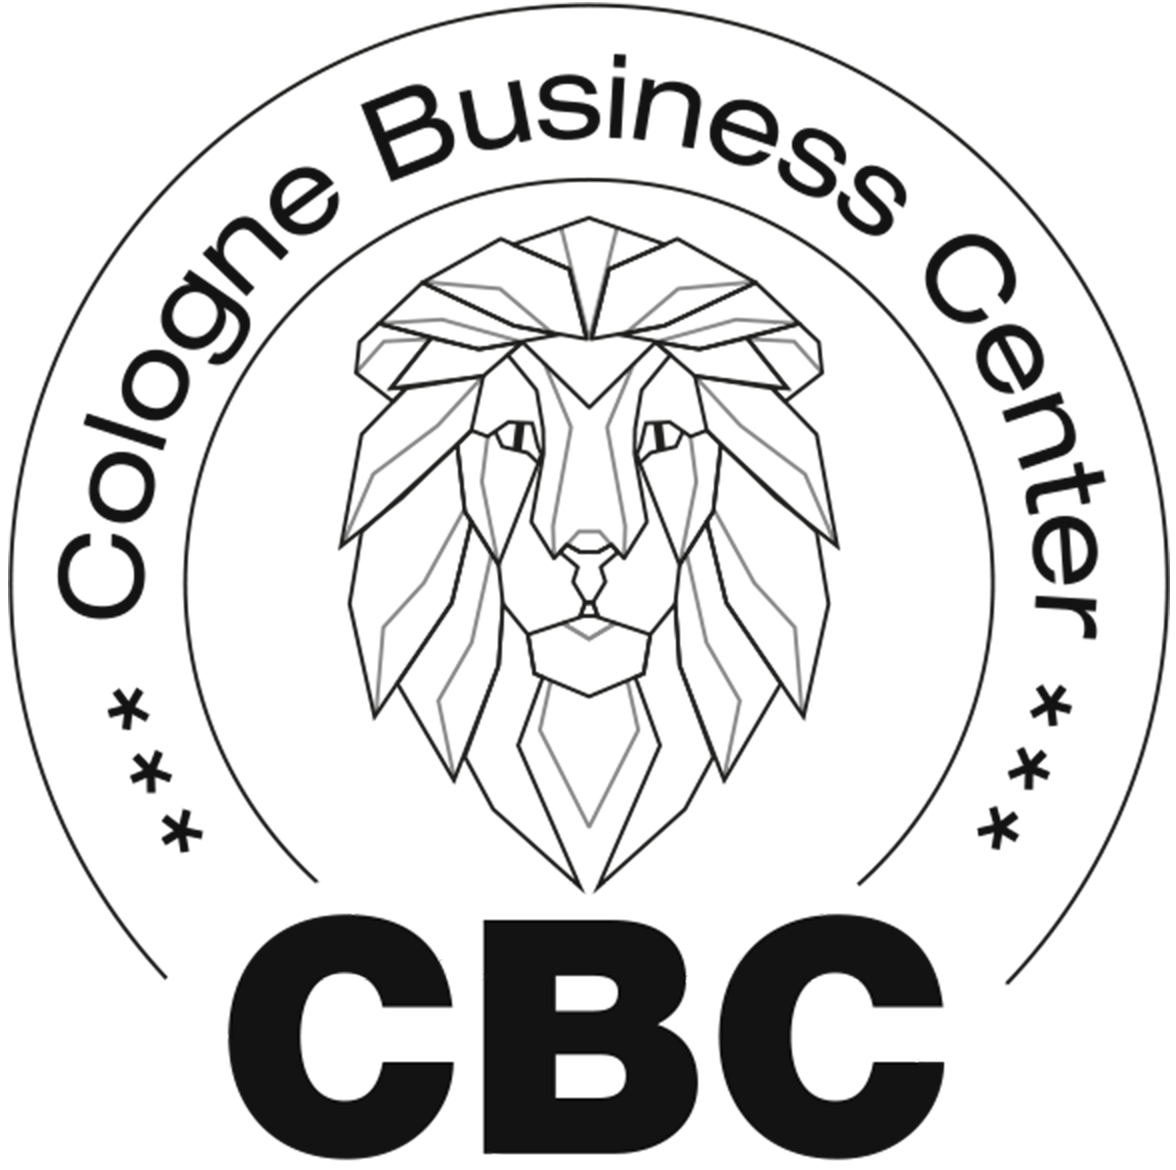 CBC-Cologne Business Center